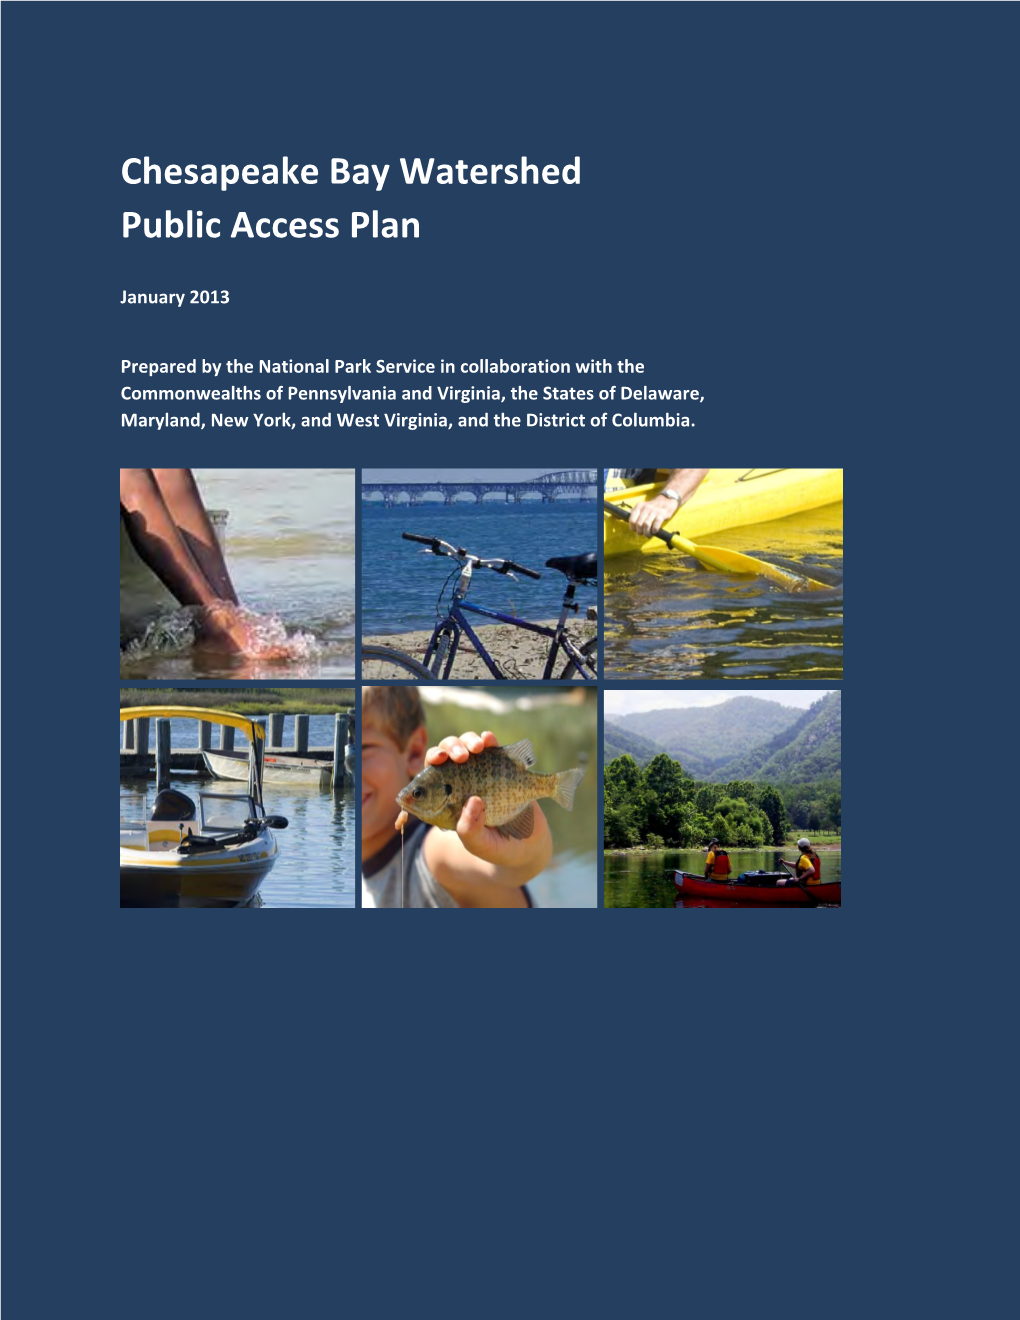 Chesapeake Bay Watershed Public Access Plan